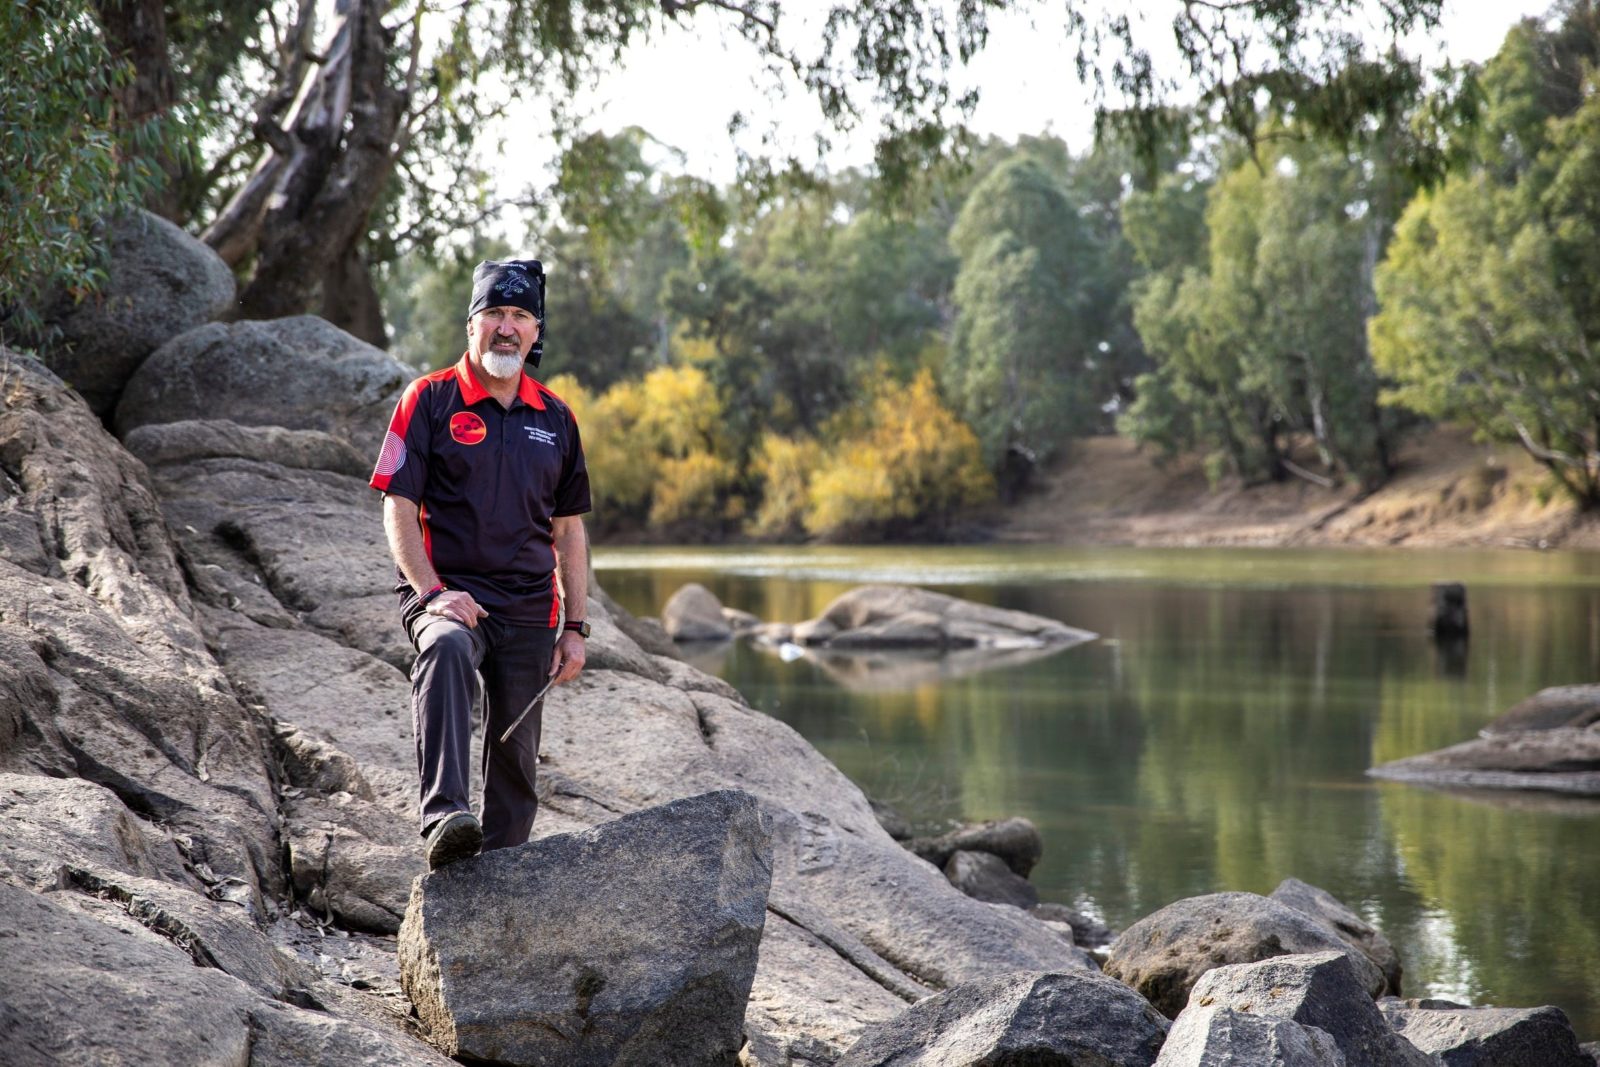 Bundyi Aboriginal Cultural Tours guide Mark Saddler by the Murrumbidgee River